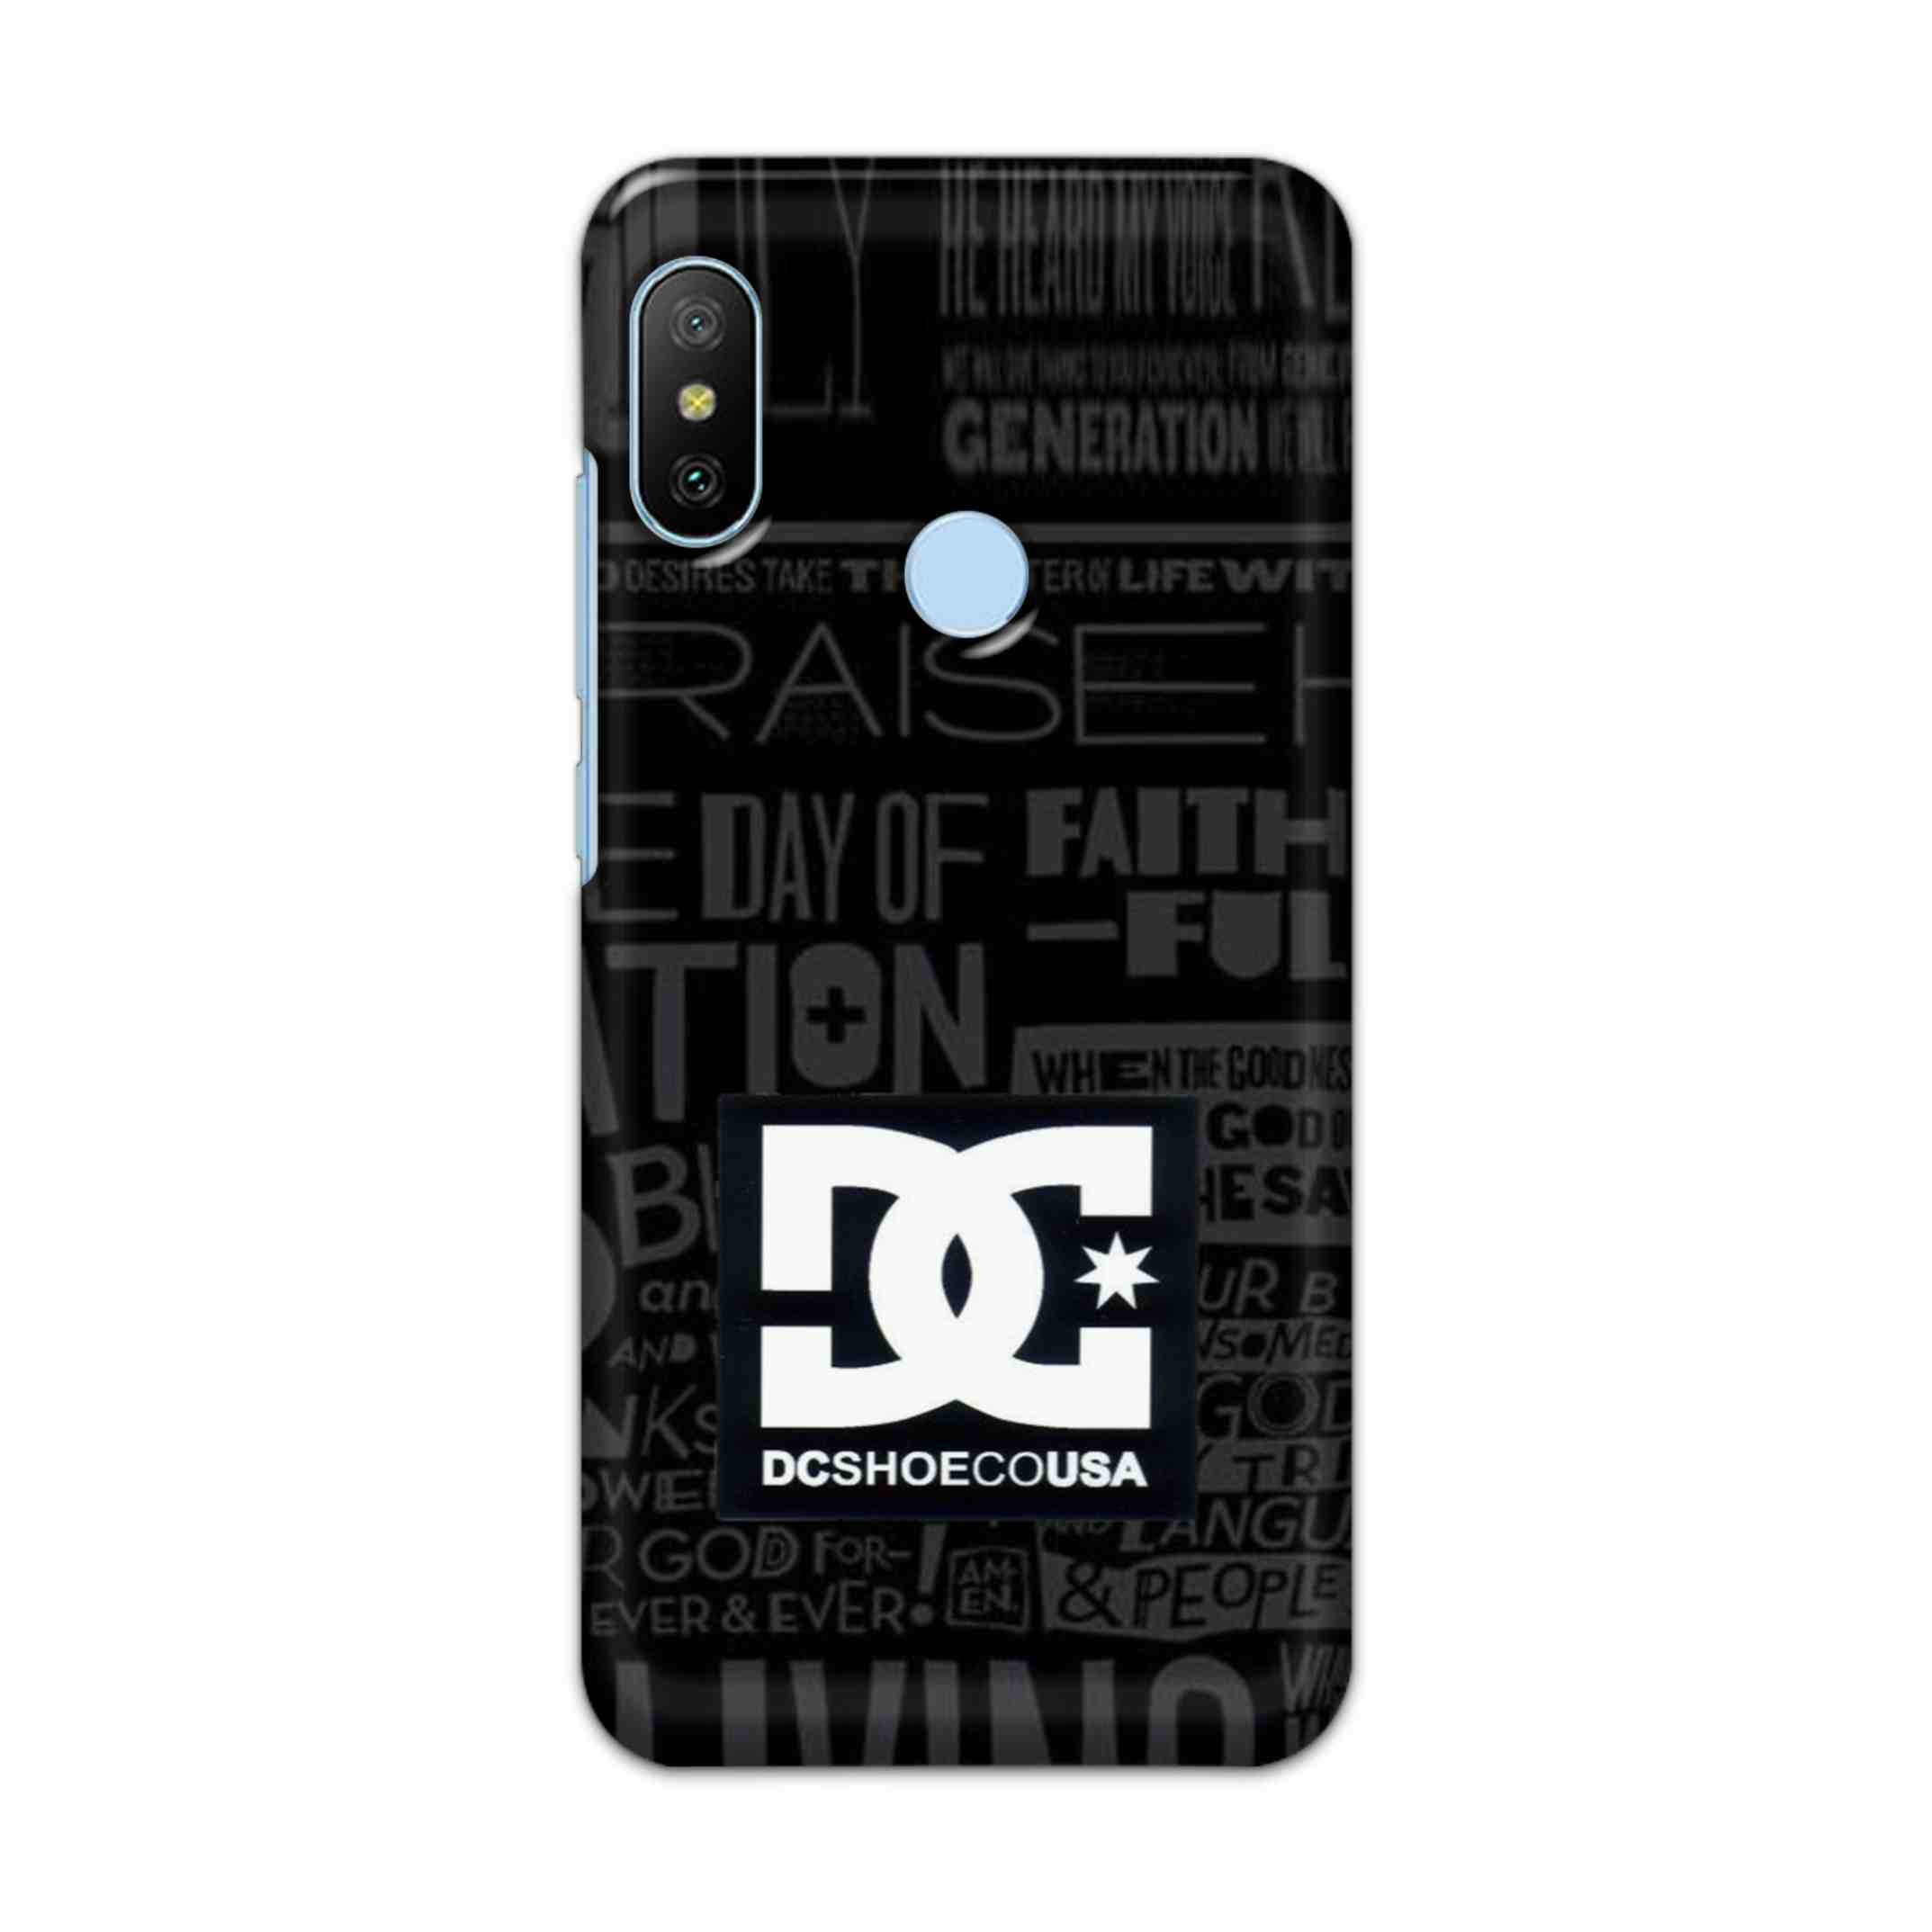 Buy Dc Shoecousa Hard Back Mobile Phone Case/Cover For Xiaomi Redmi 6 Pro Online